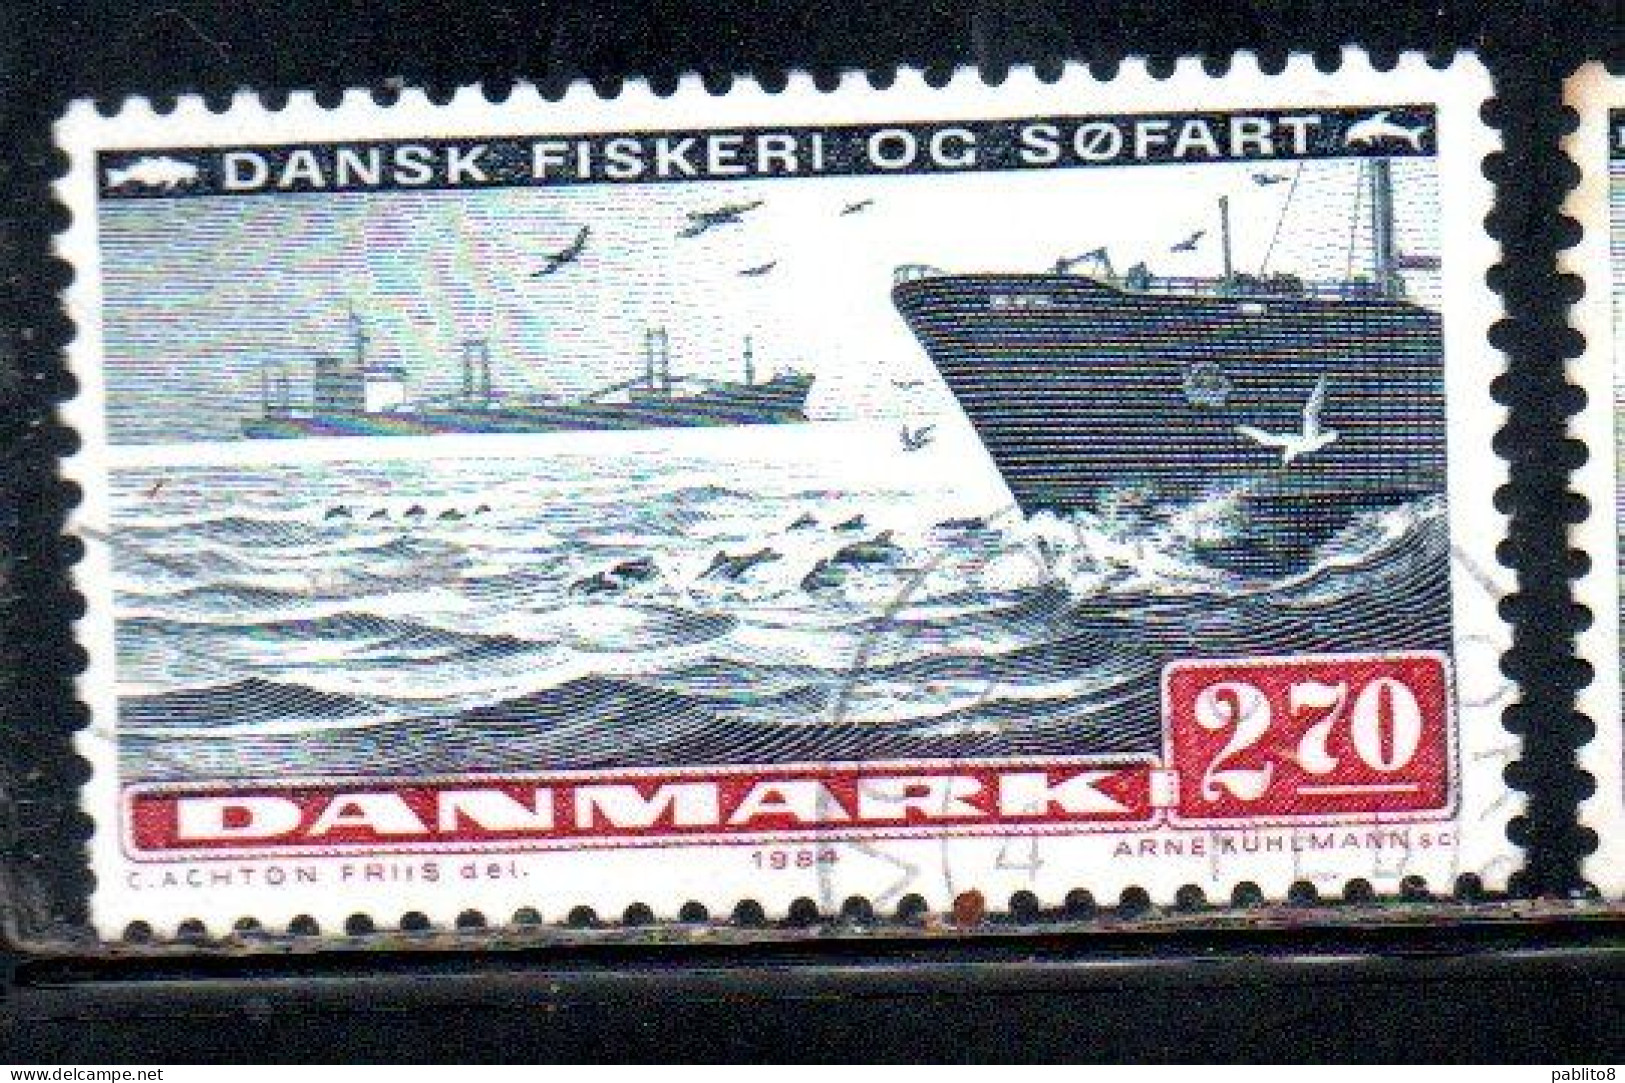 DANEMARK DANMARK DENMARK DANIMARCA 1984 FISHING AND SHIPPING SEA TRANSPORT 2.70k USED USATO OBLITERE - Oblitérés